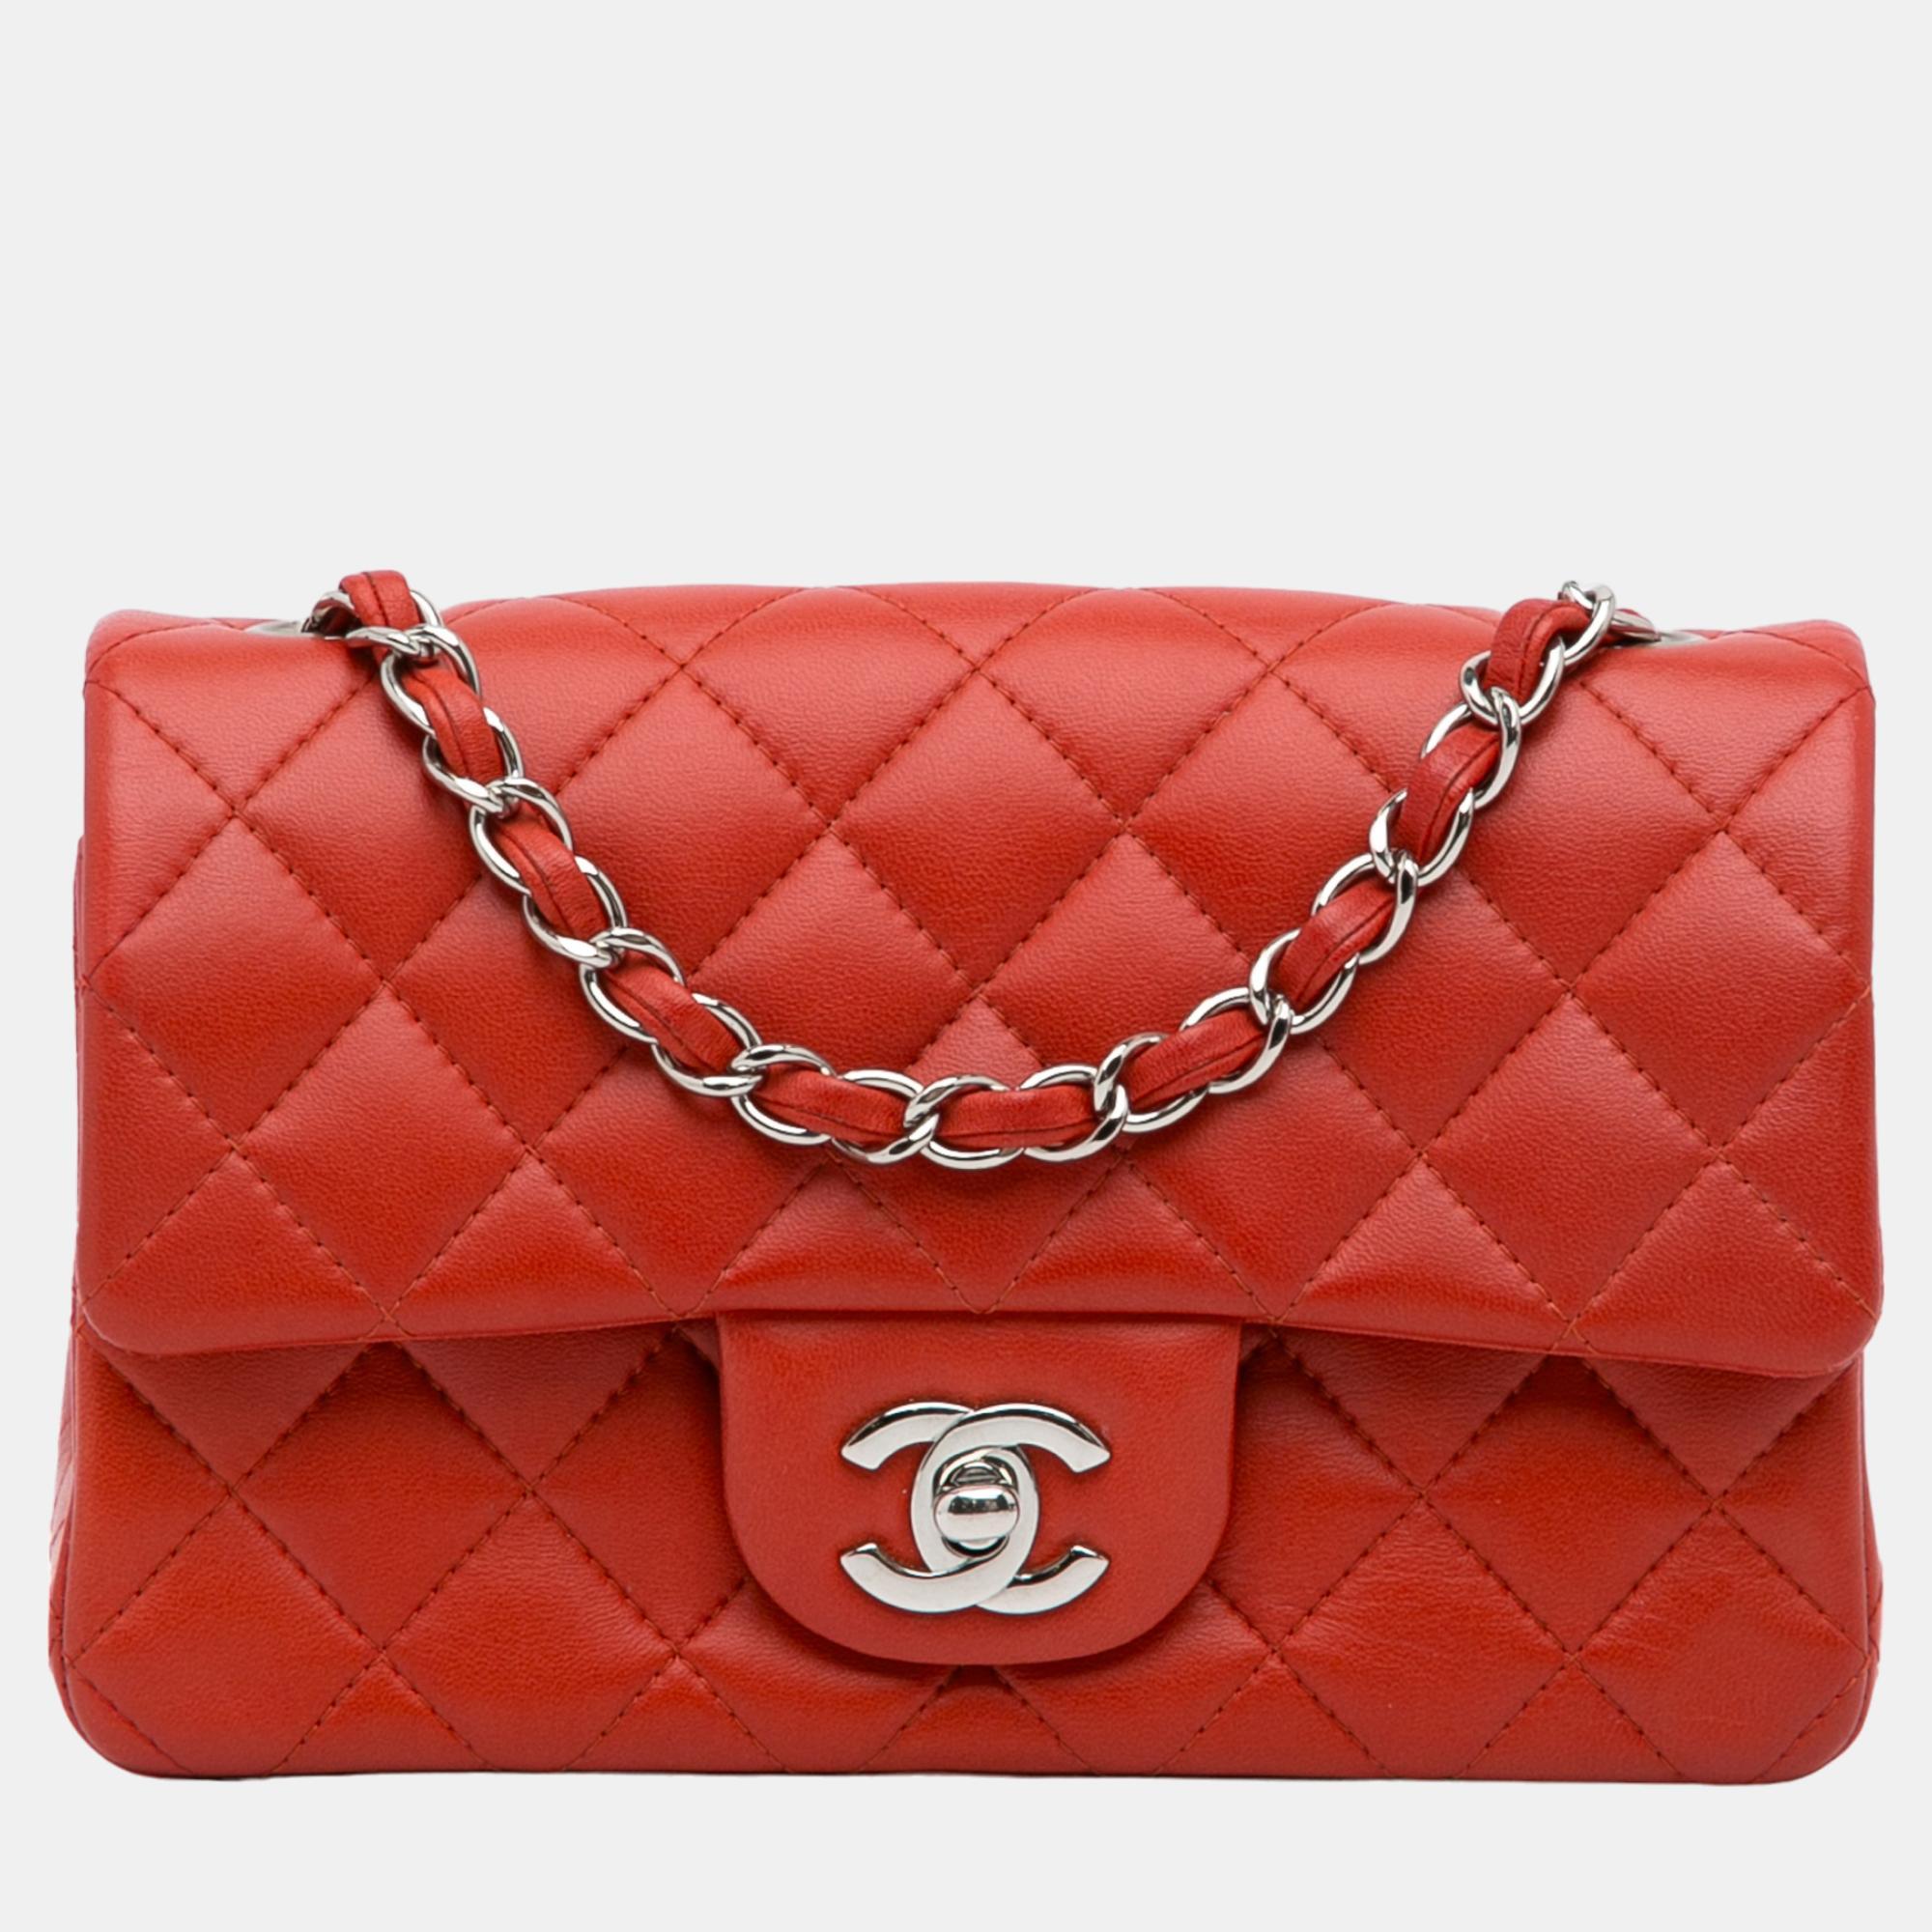 Chanel red mini classic lambskin rectangular single flap